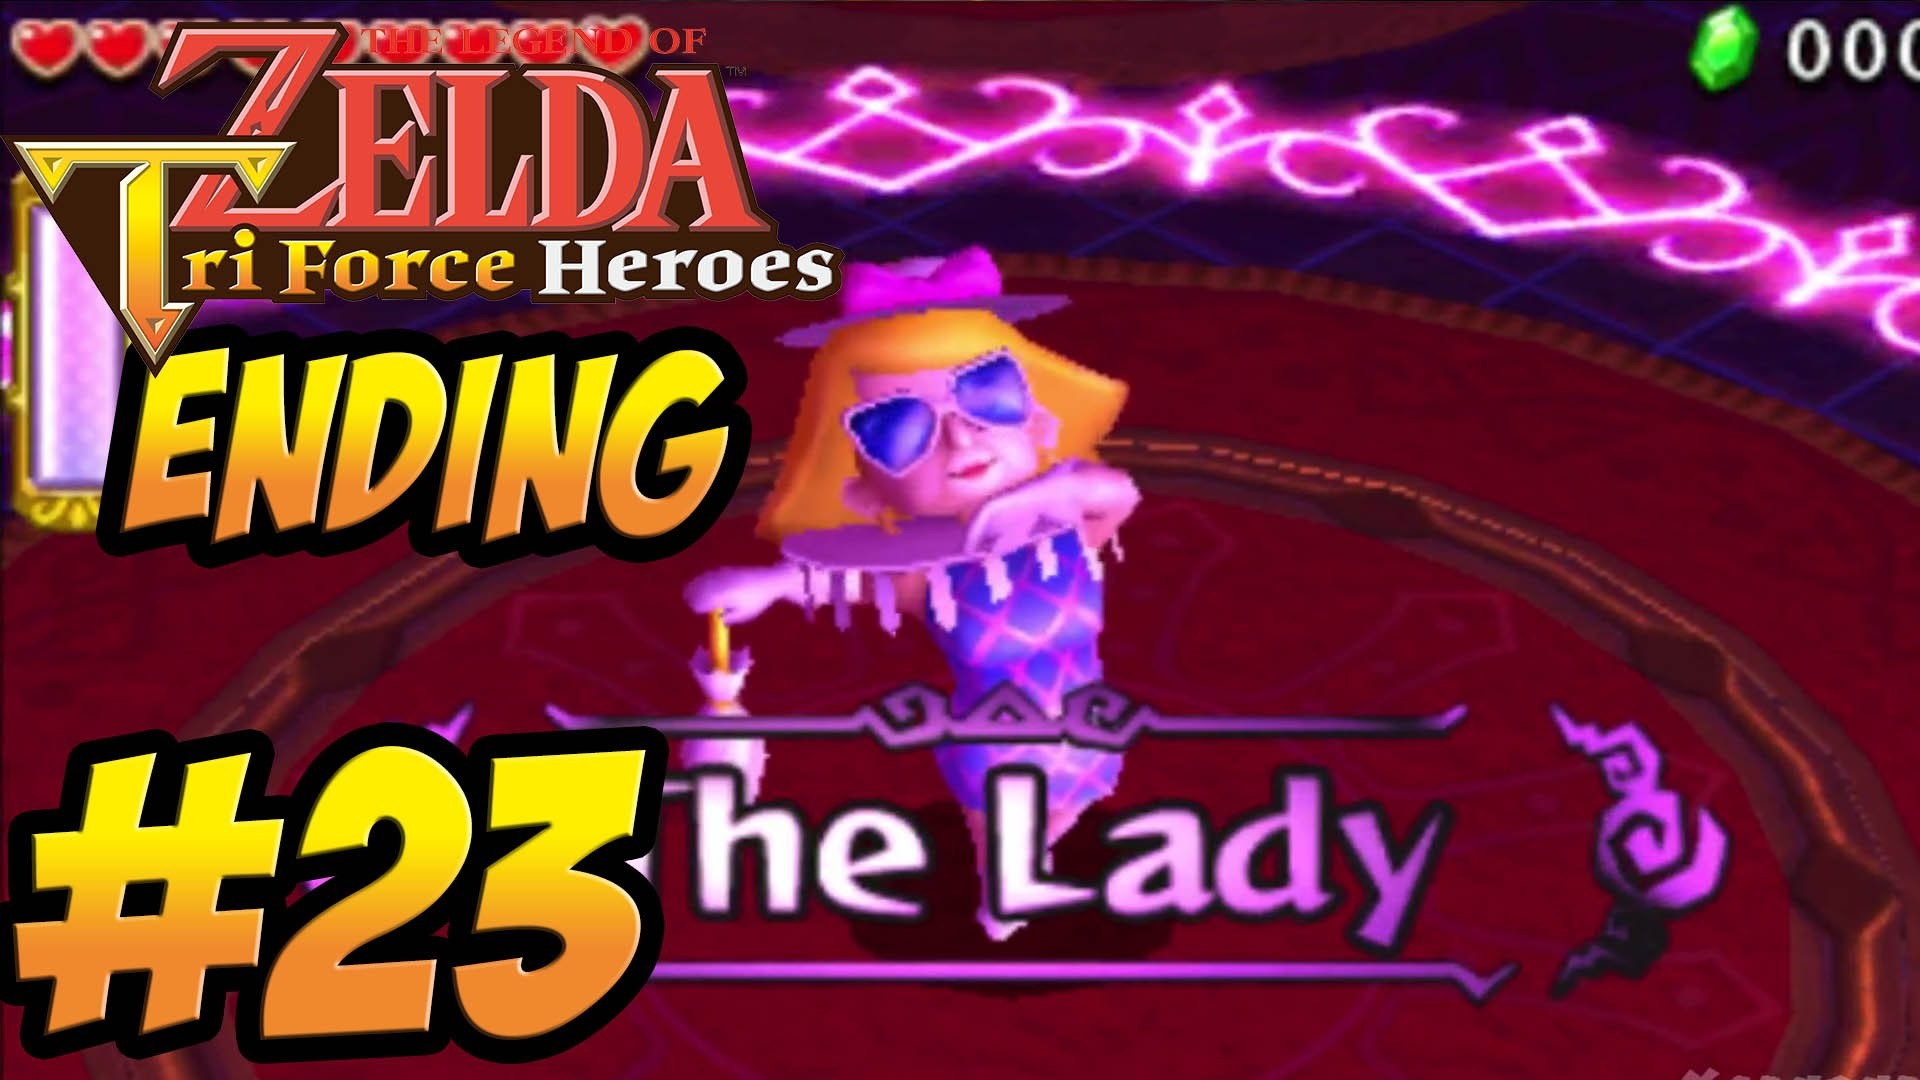 1920x1080 The Legend of Zelda Triforce Heroes - ENDING Boss Gameplay Walkthrough Part  23 - [ 3DS ] - YouTube